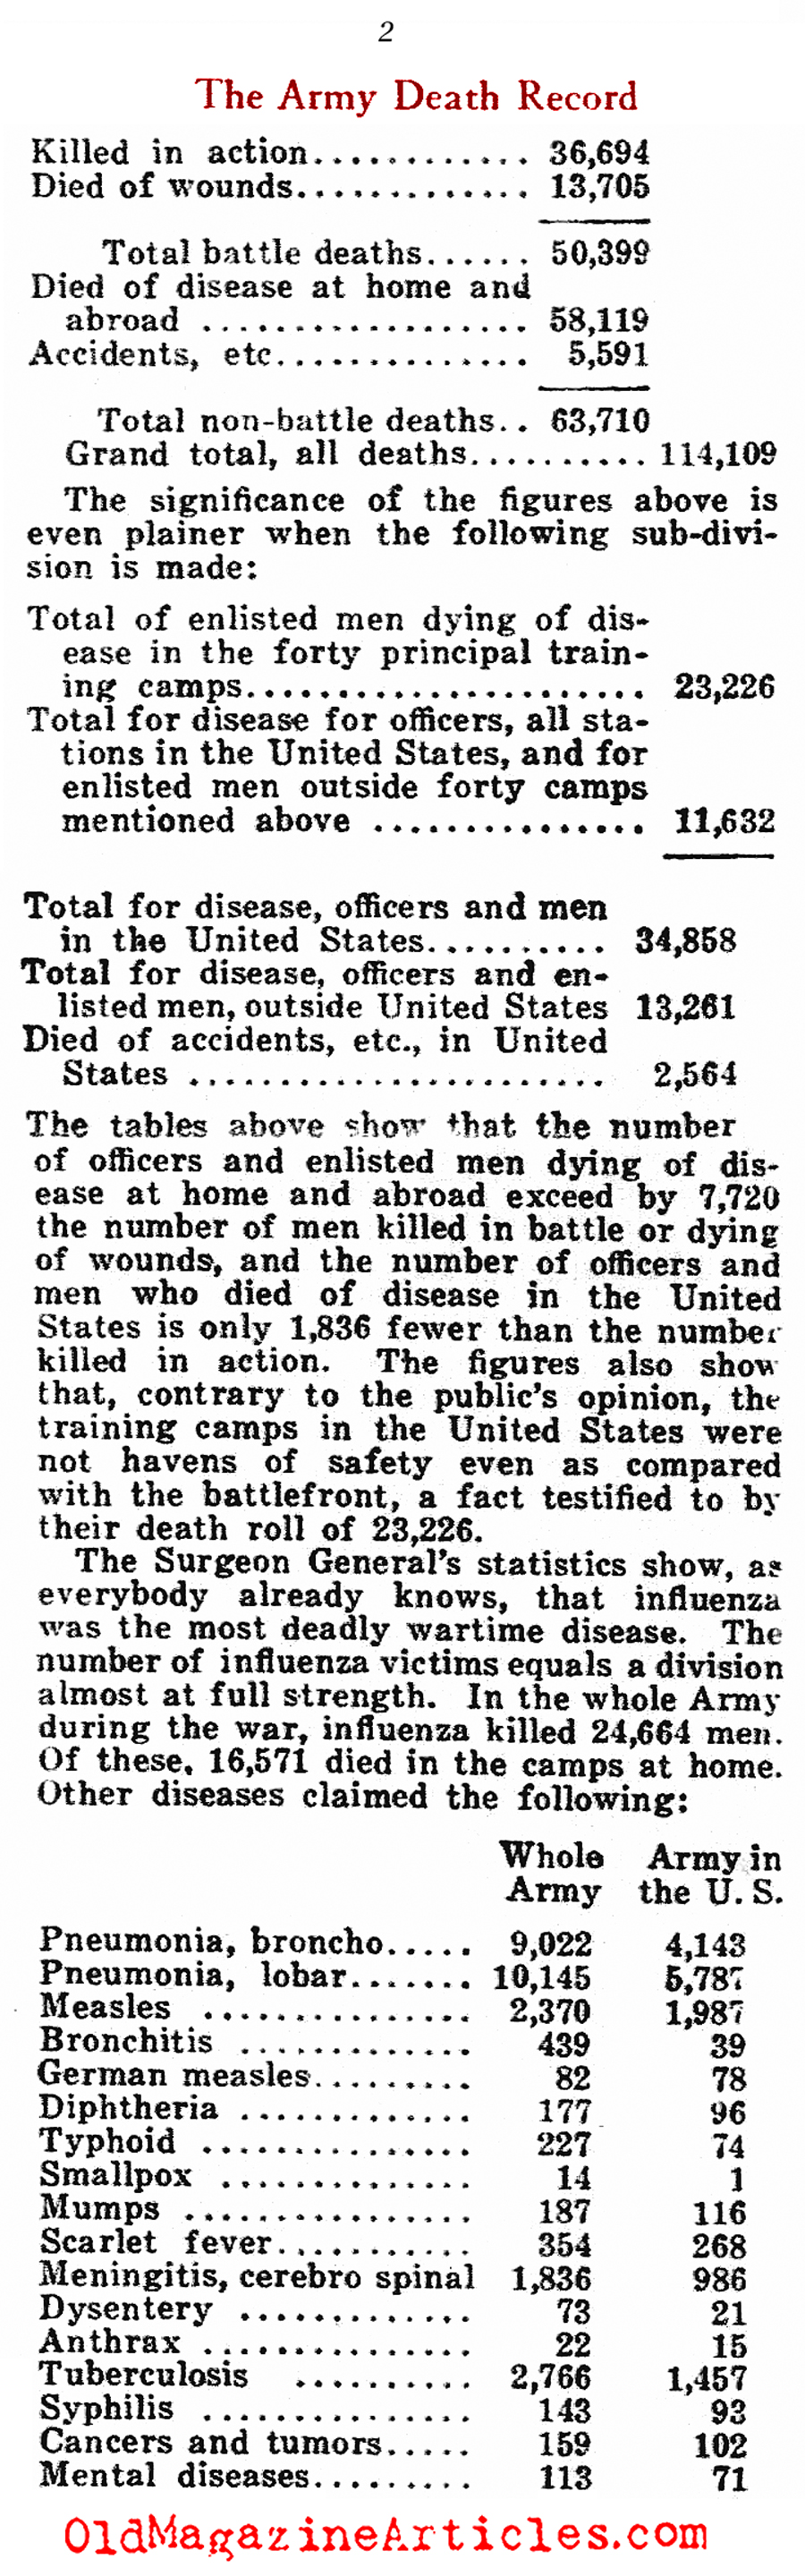 The American Death Record  (American Legion Weekly, 1922)